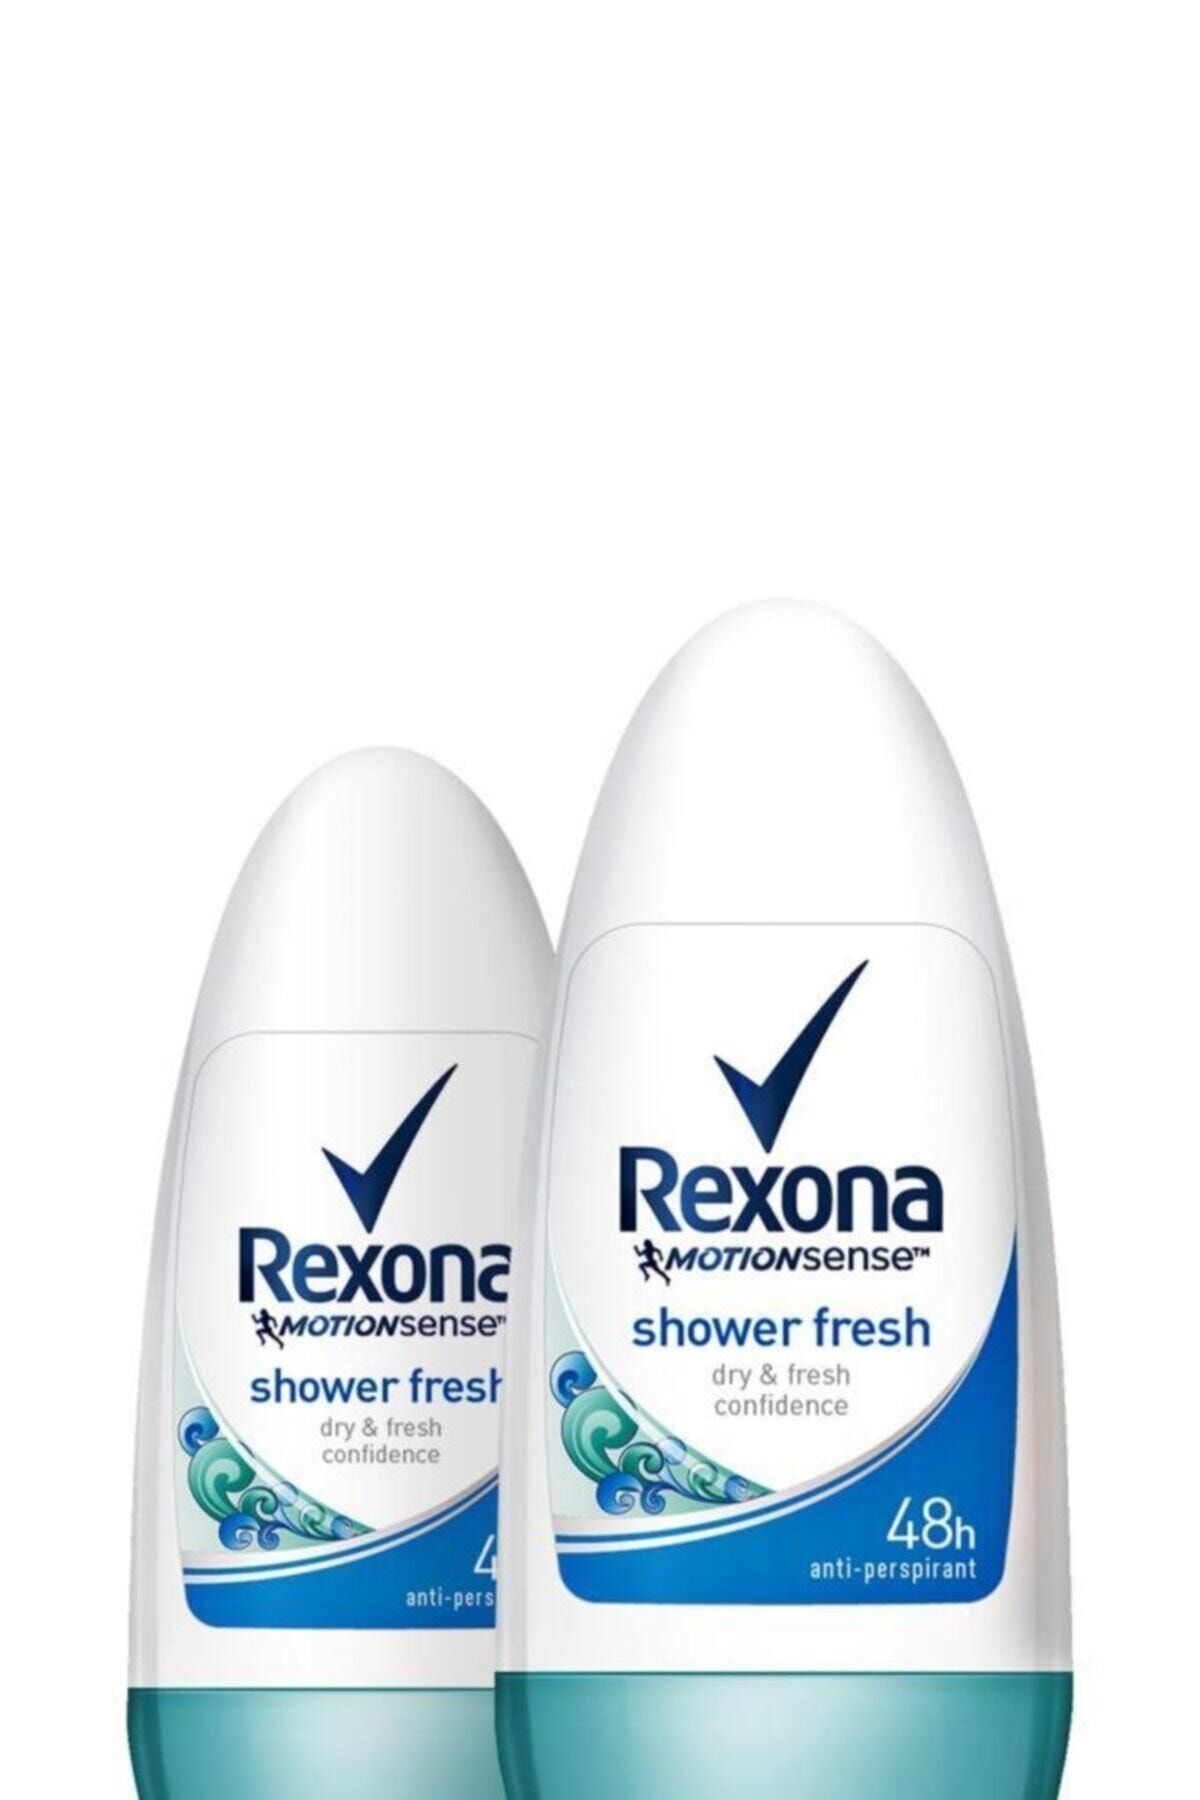 Shower fresh. Рексона Shower Fresh. Рексона дезодорант Fresh. Дезодорант Рексона женский морской Бриз. Rexona Motionsense Shower Fresh дезодорант.